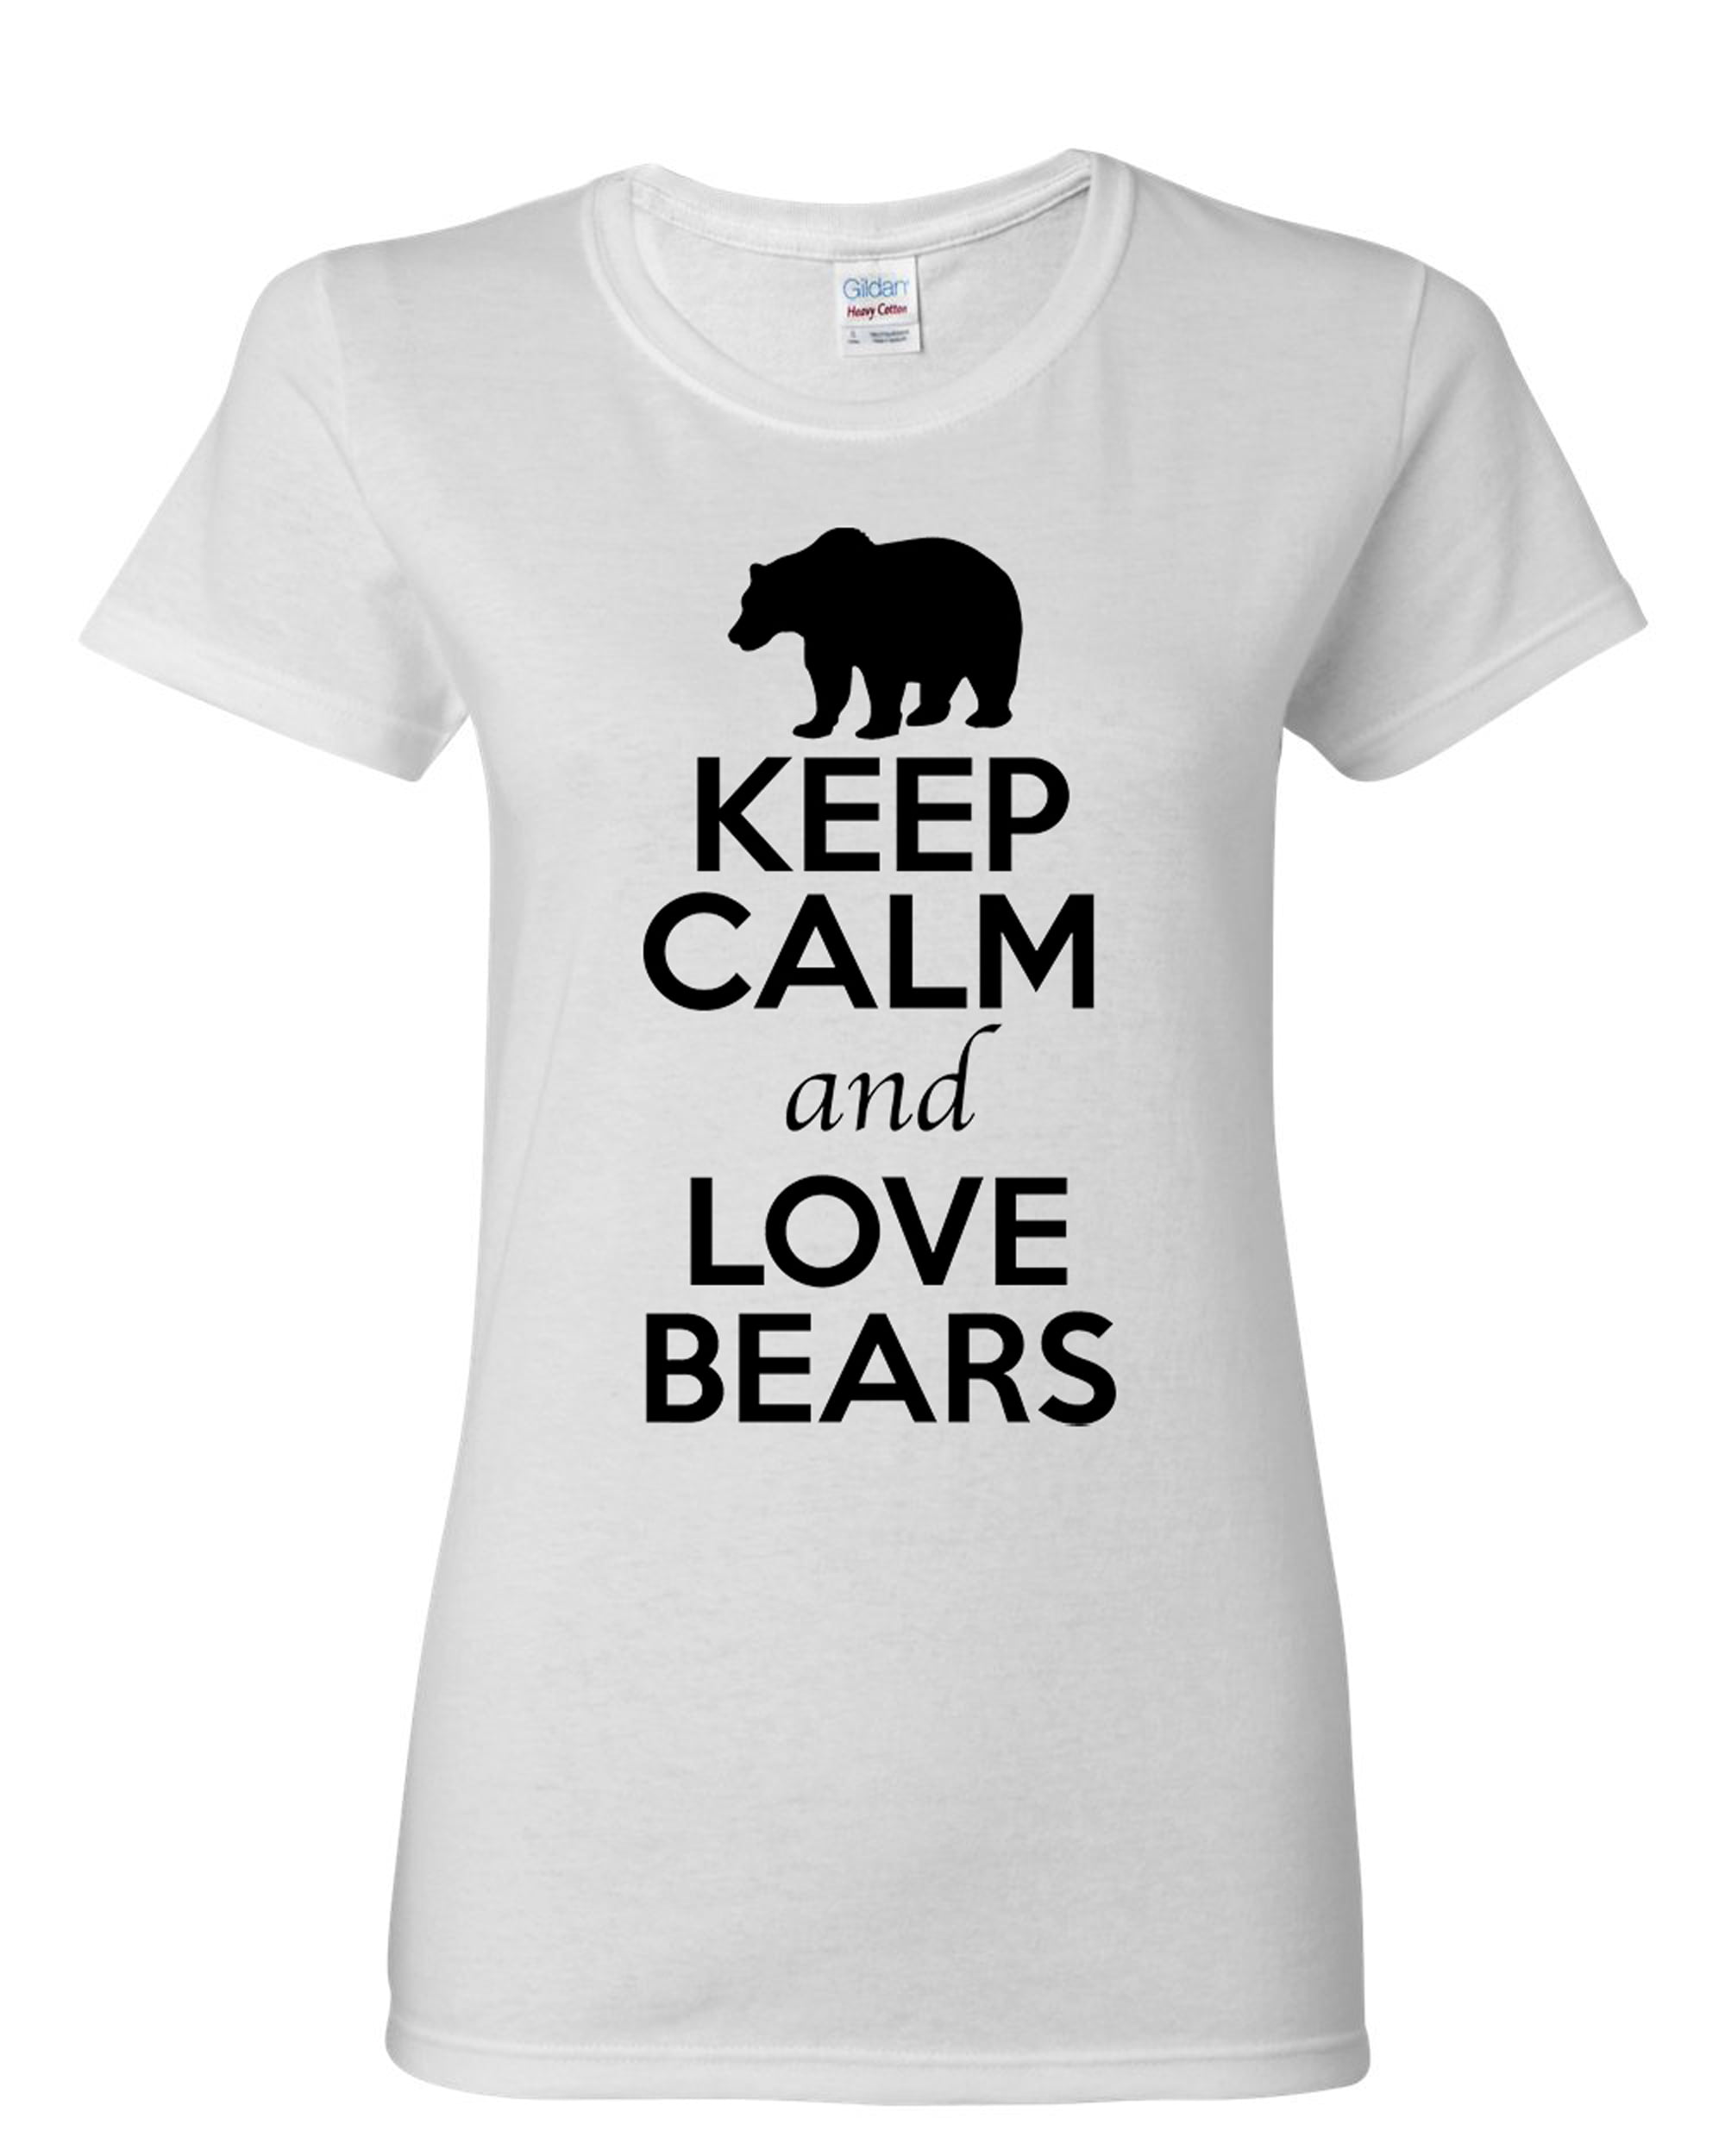 ladies bears shirts